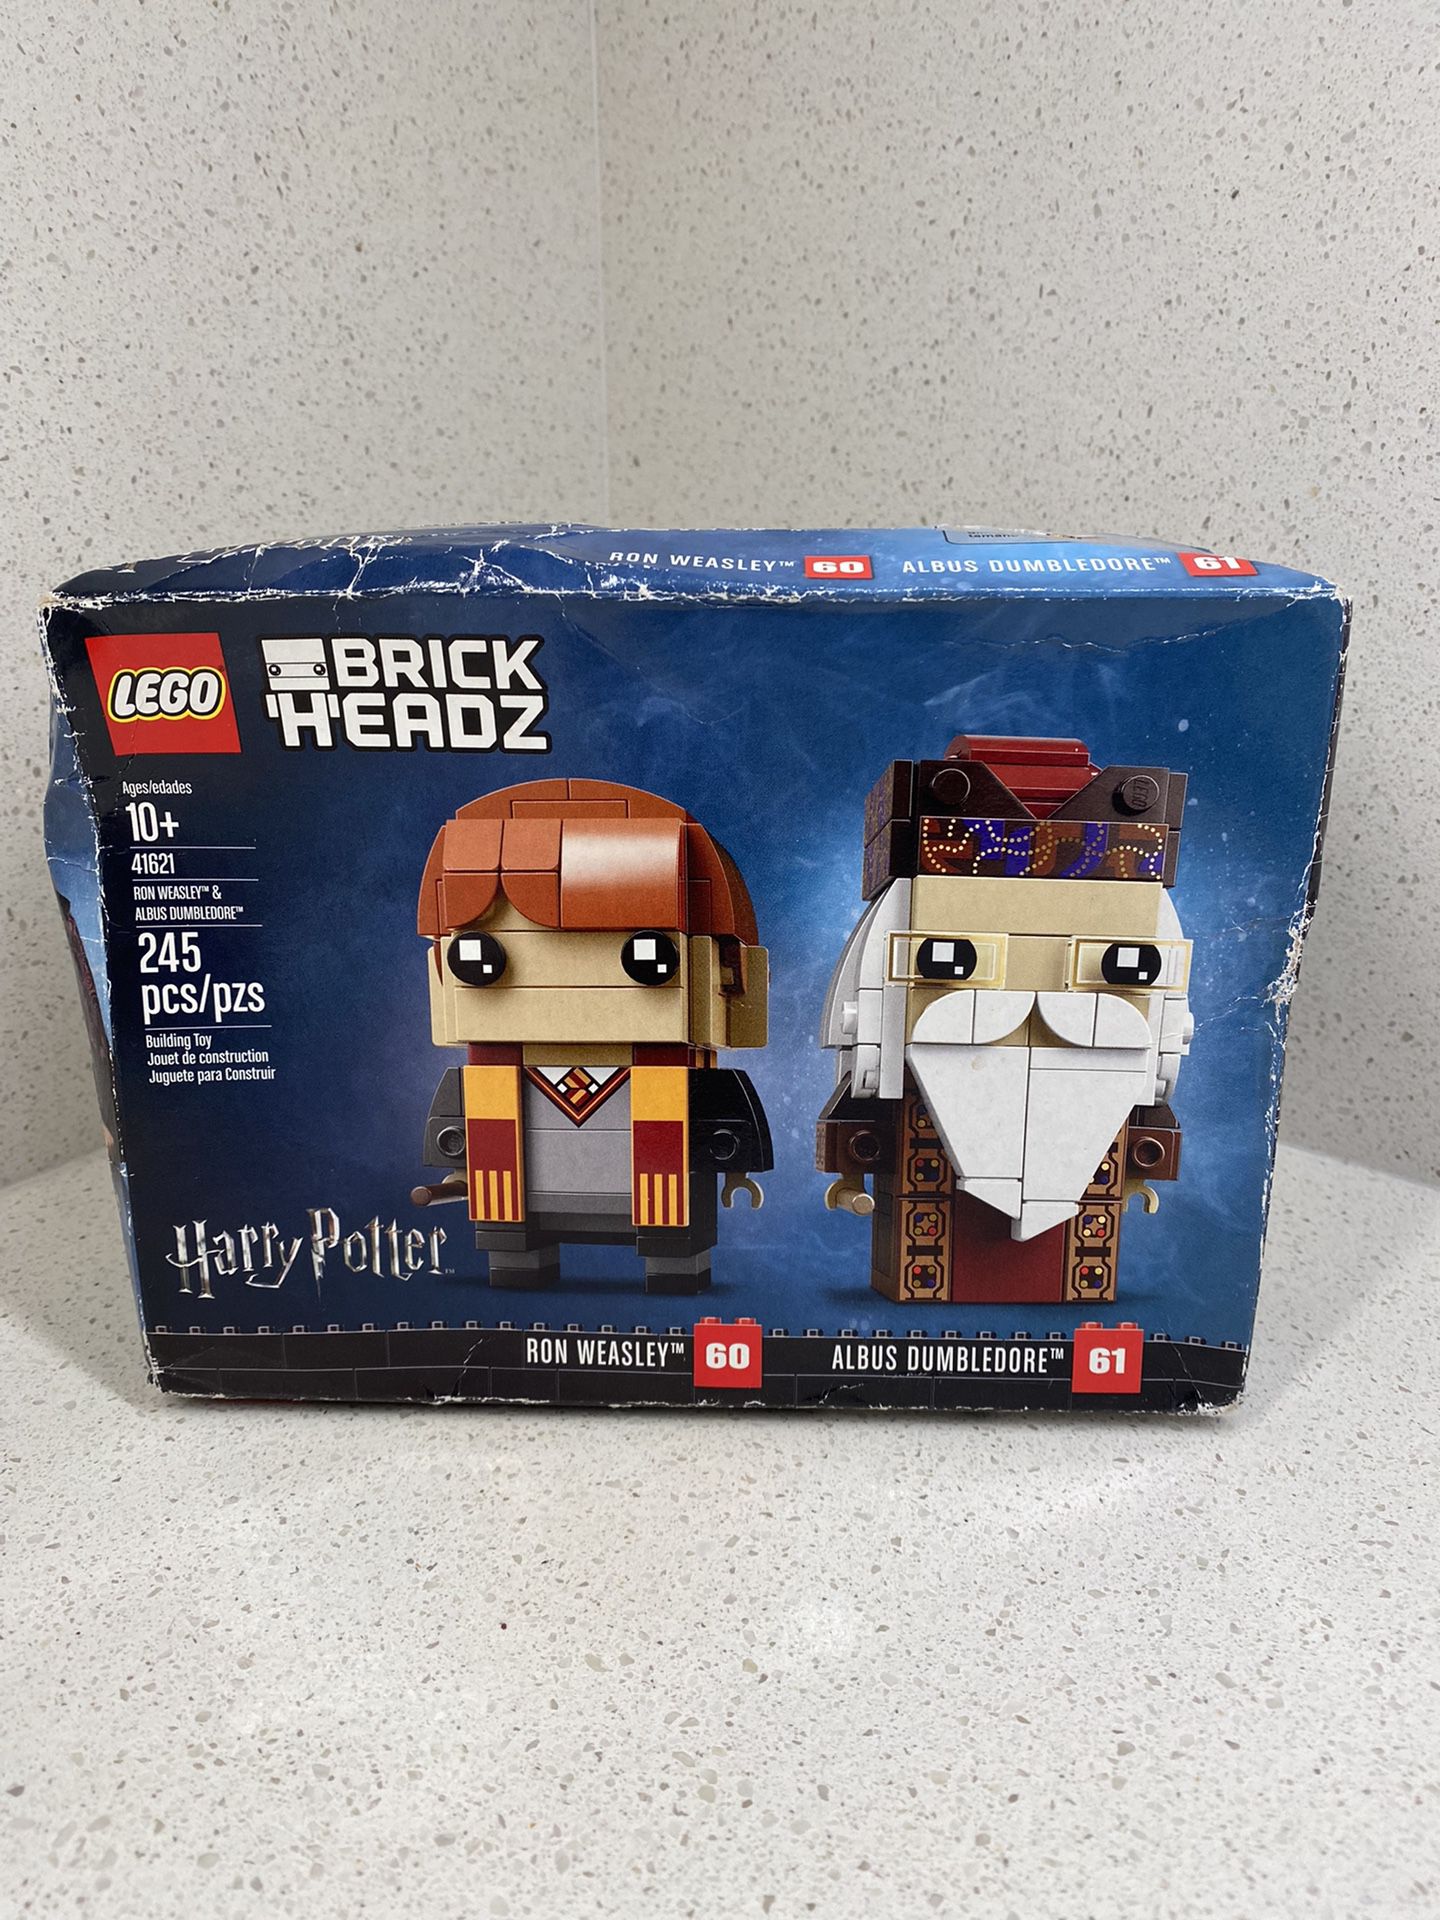 Lego Harry Potter Brickheadz 41621 Albus Dumbledore and Ron Weasley **RETIRED**